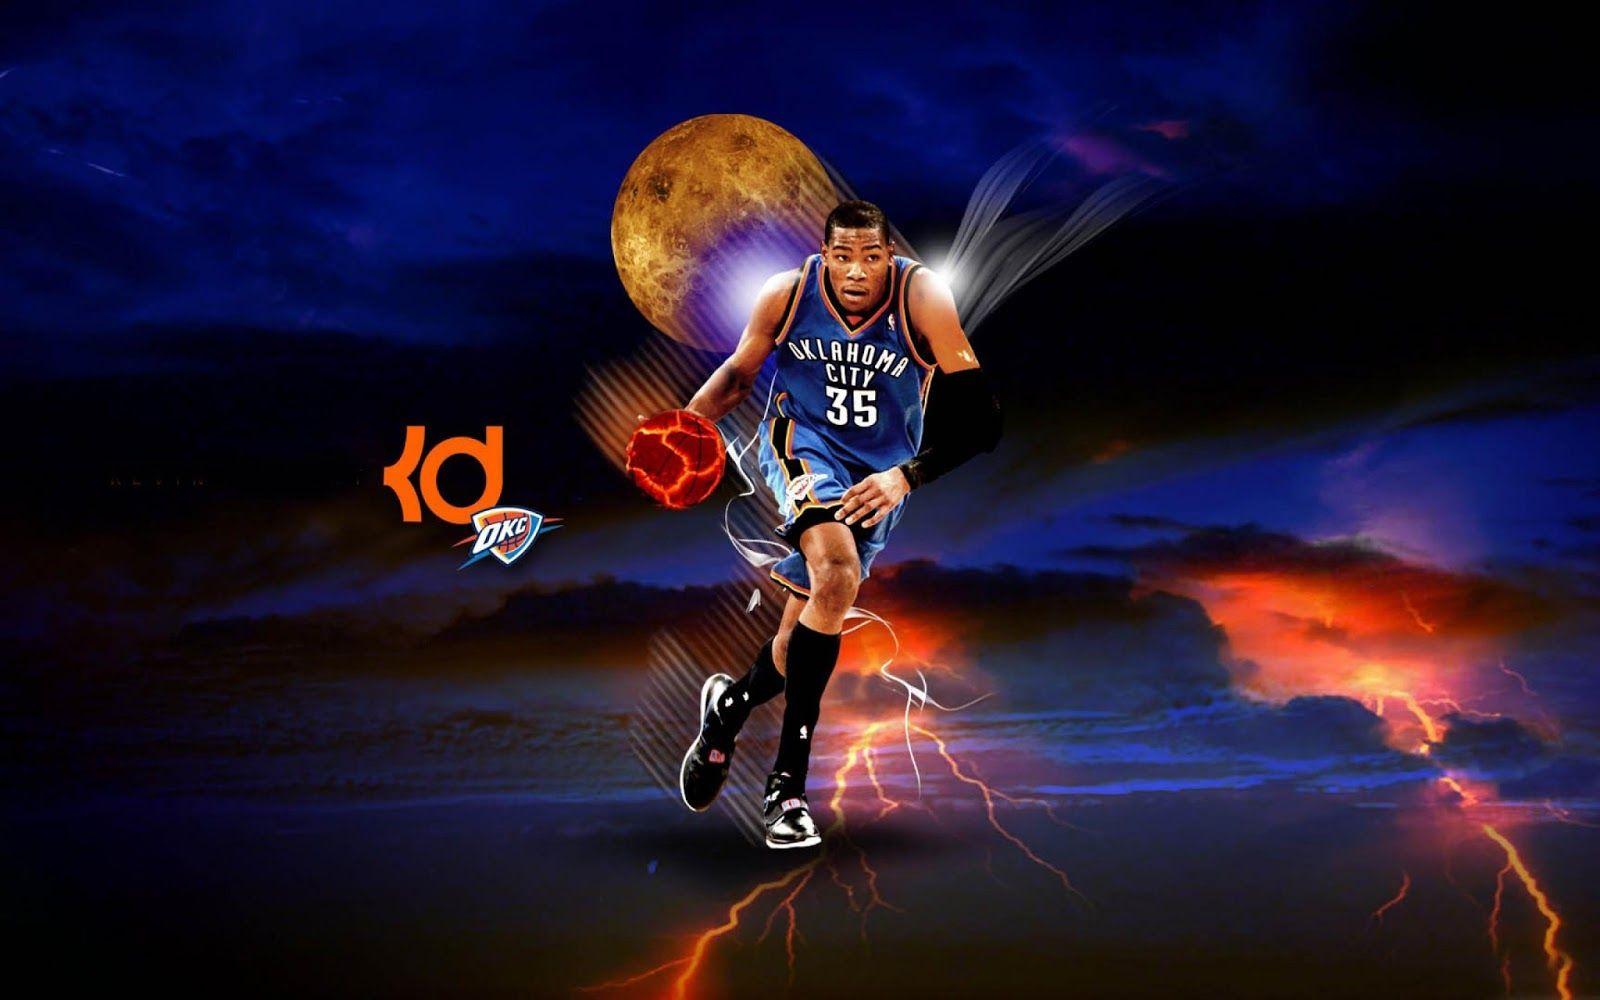 New York Knicks Latest HD Wallpaper 2013. All Basketball Players